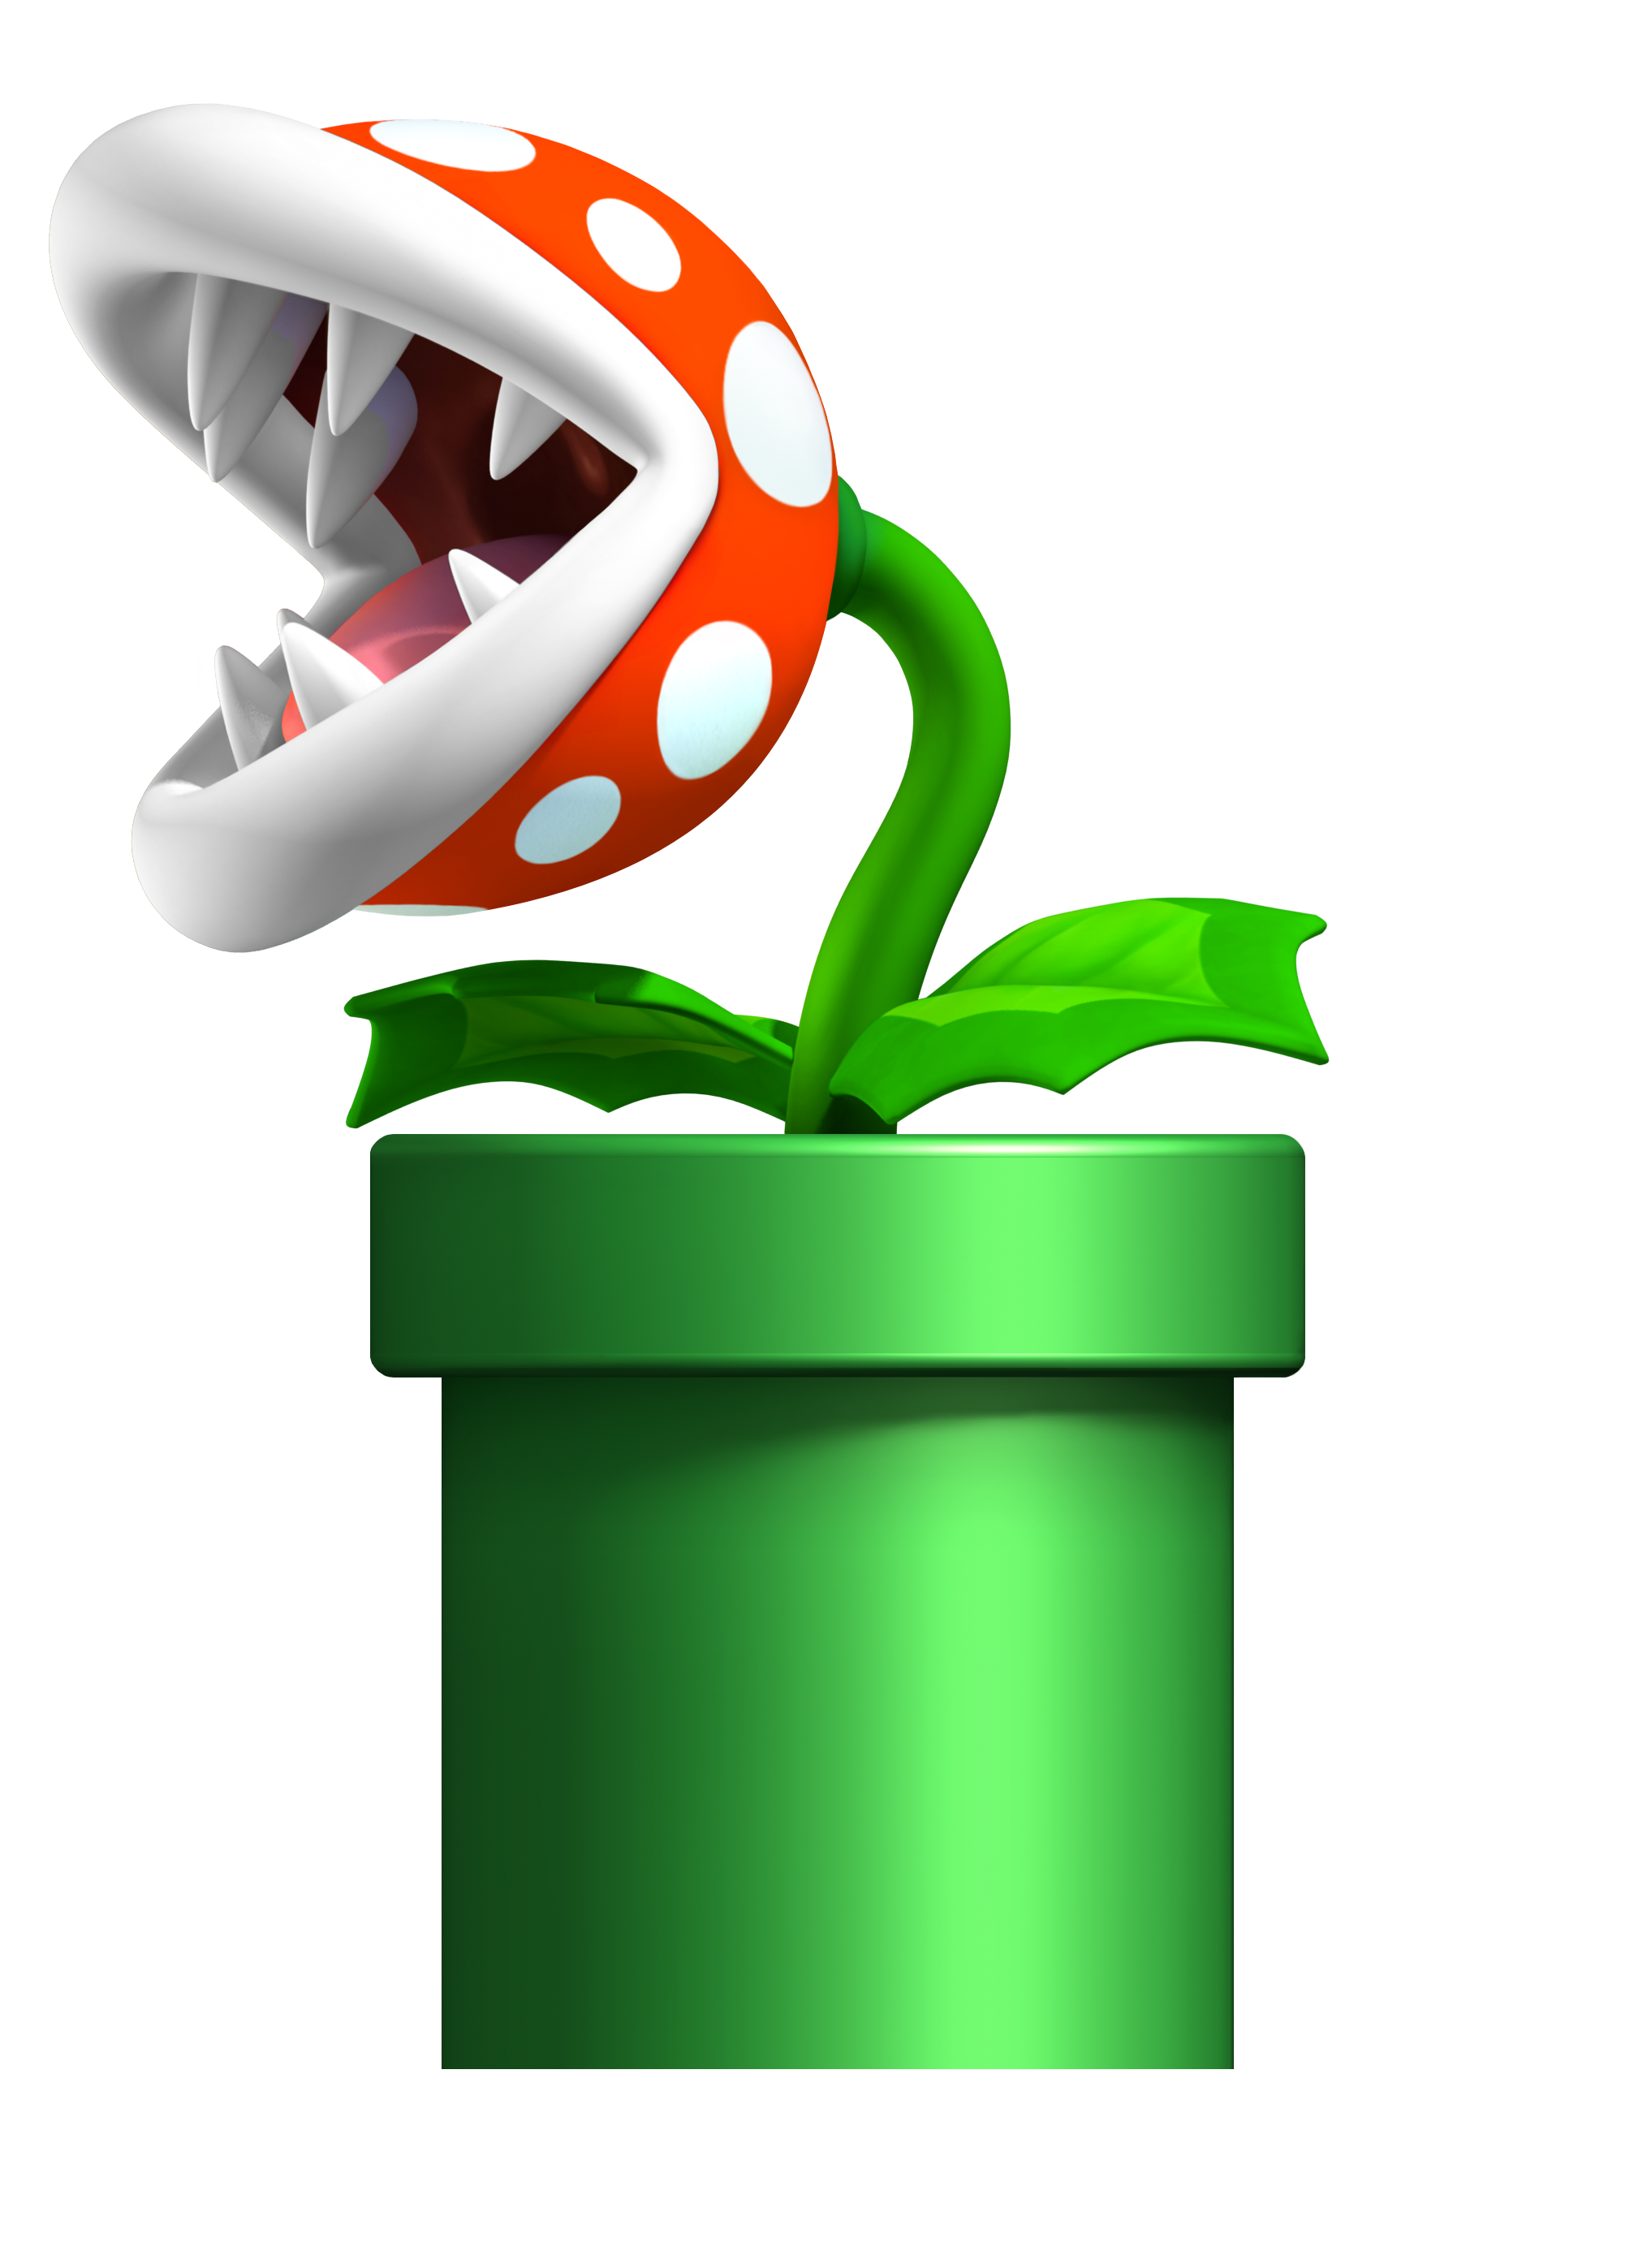 Mario Super Green Bros PNG File HD PNG Image